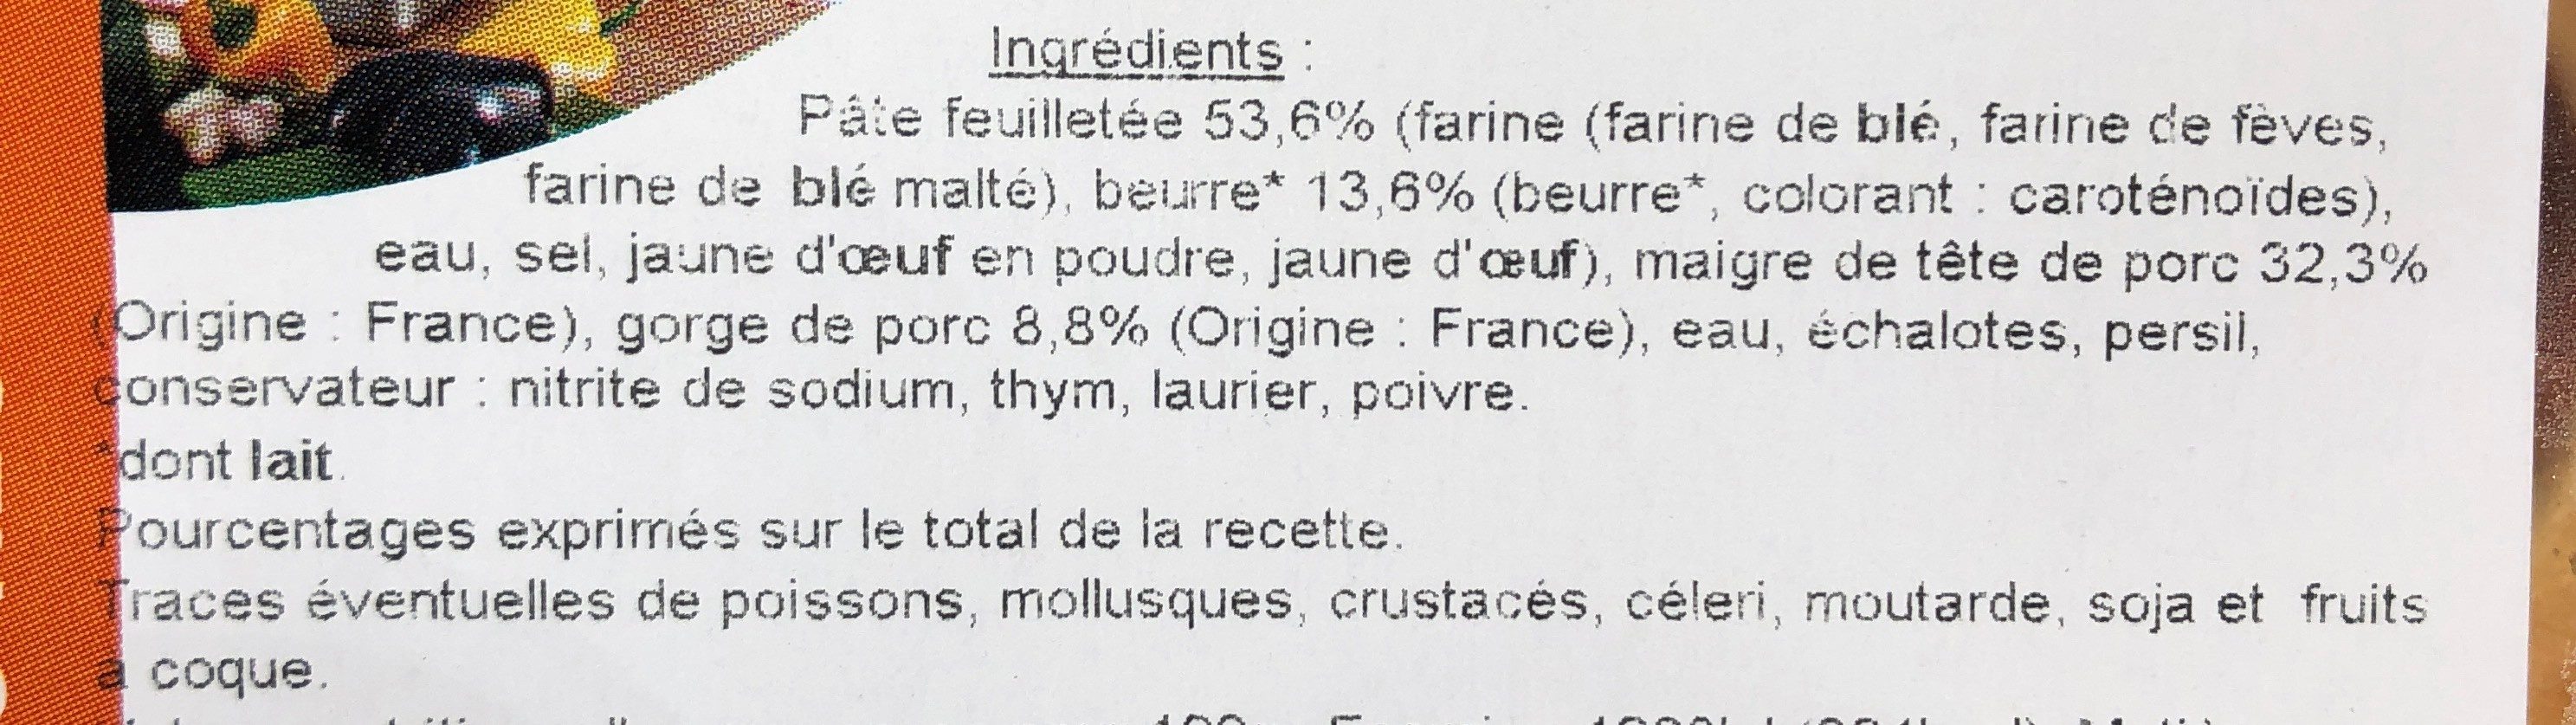 Friand à la viande - Ingredients - fr